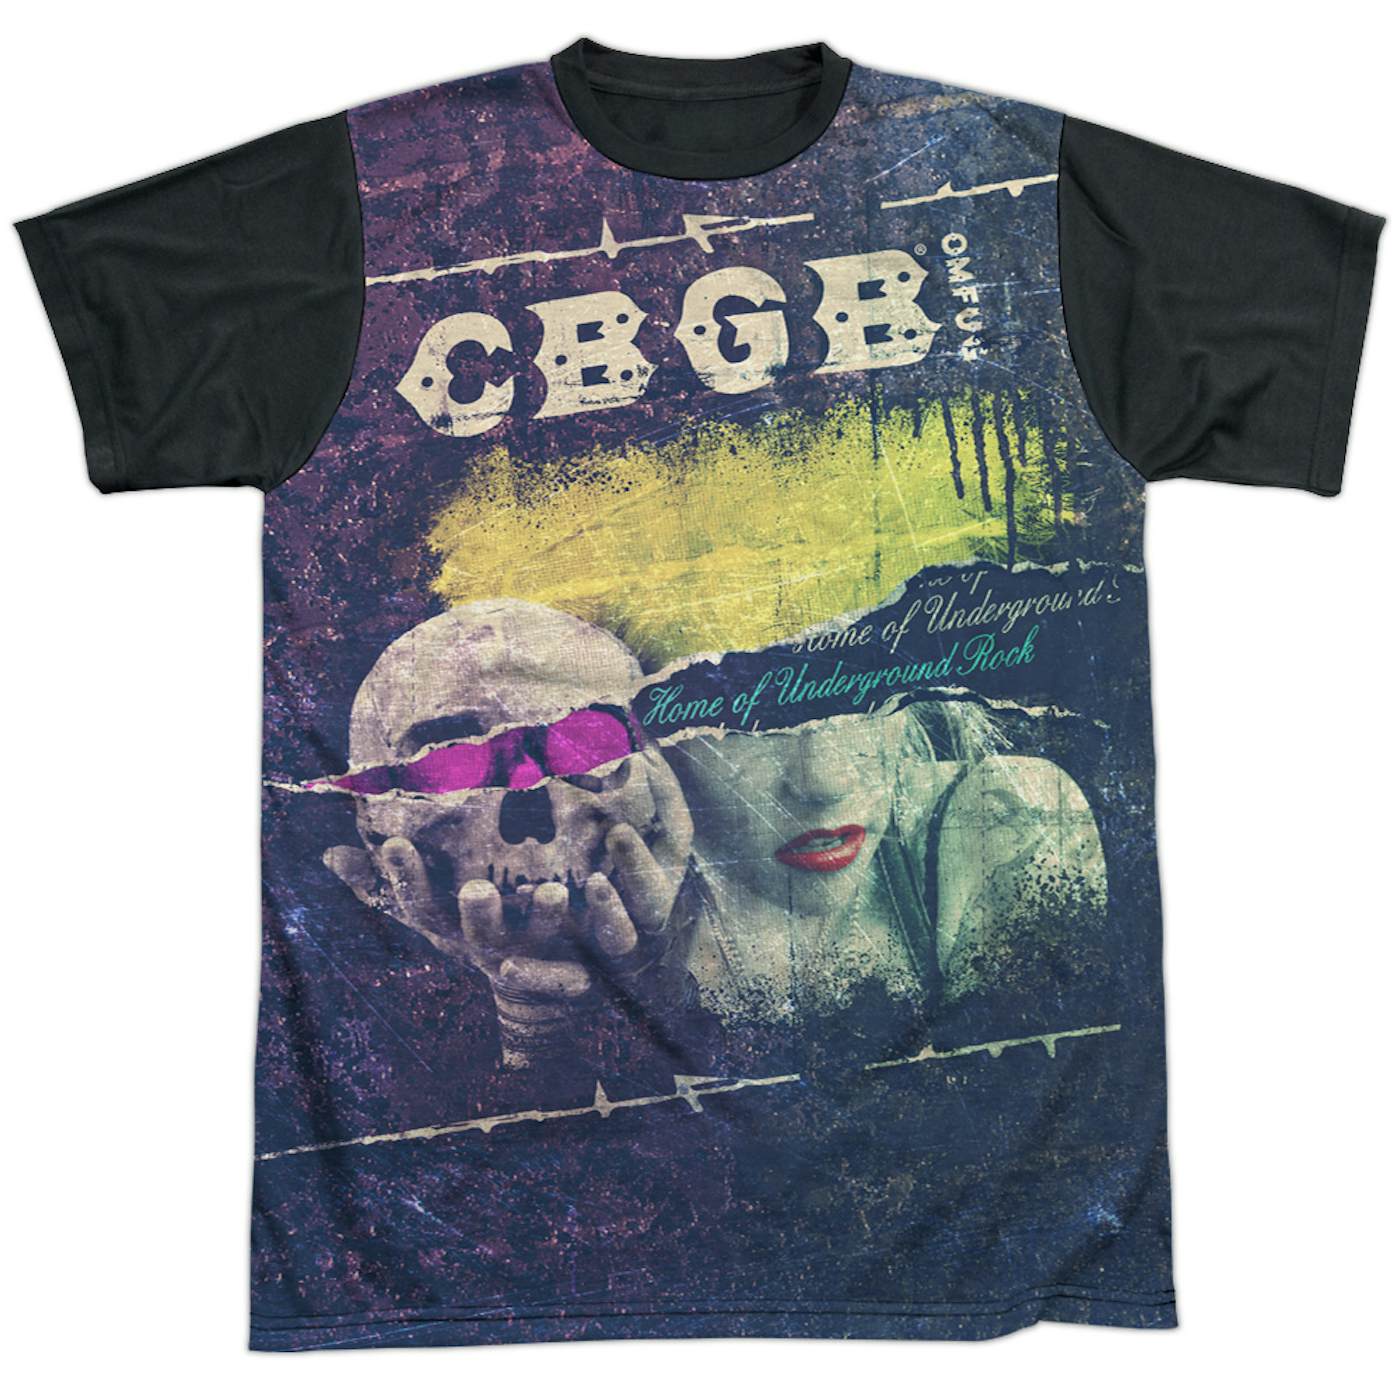 Cbgb Tee | TORN Shirt